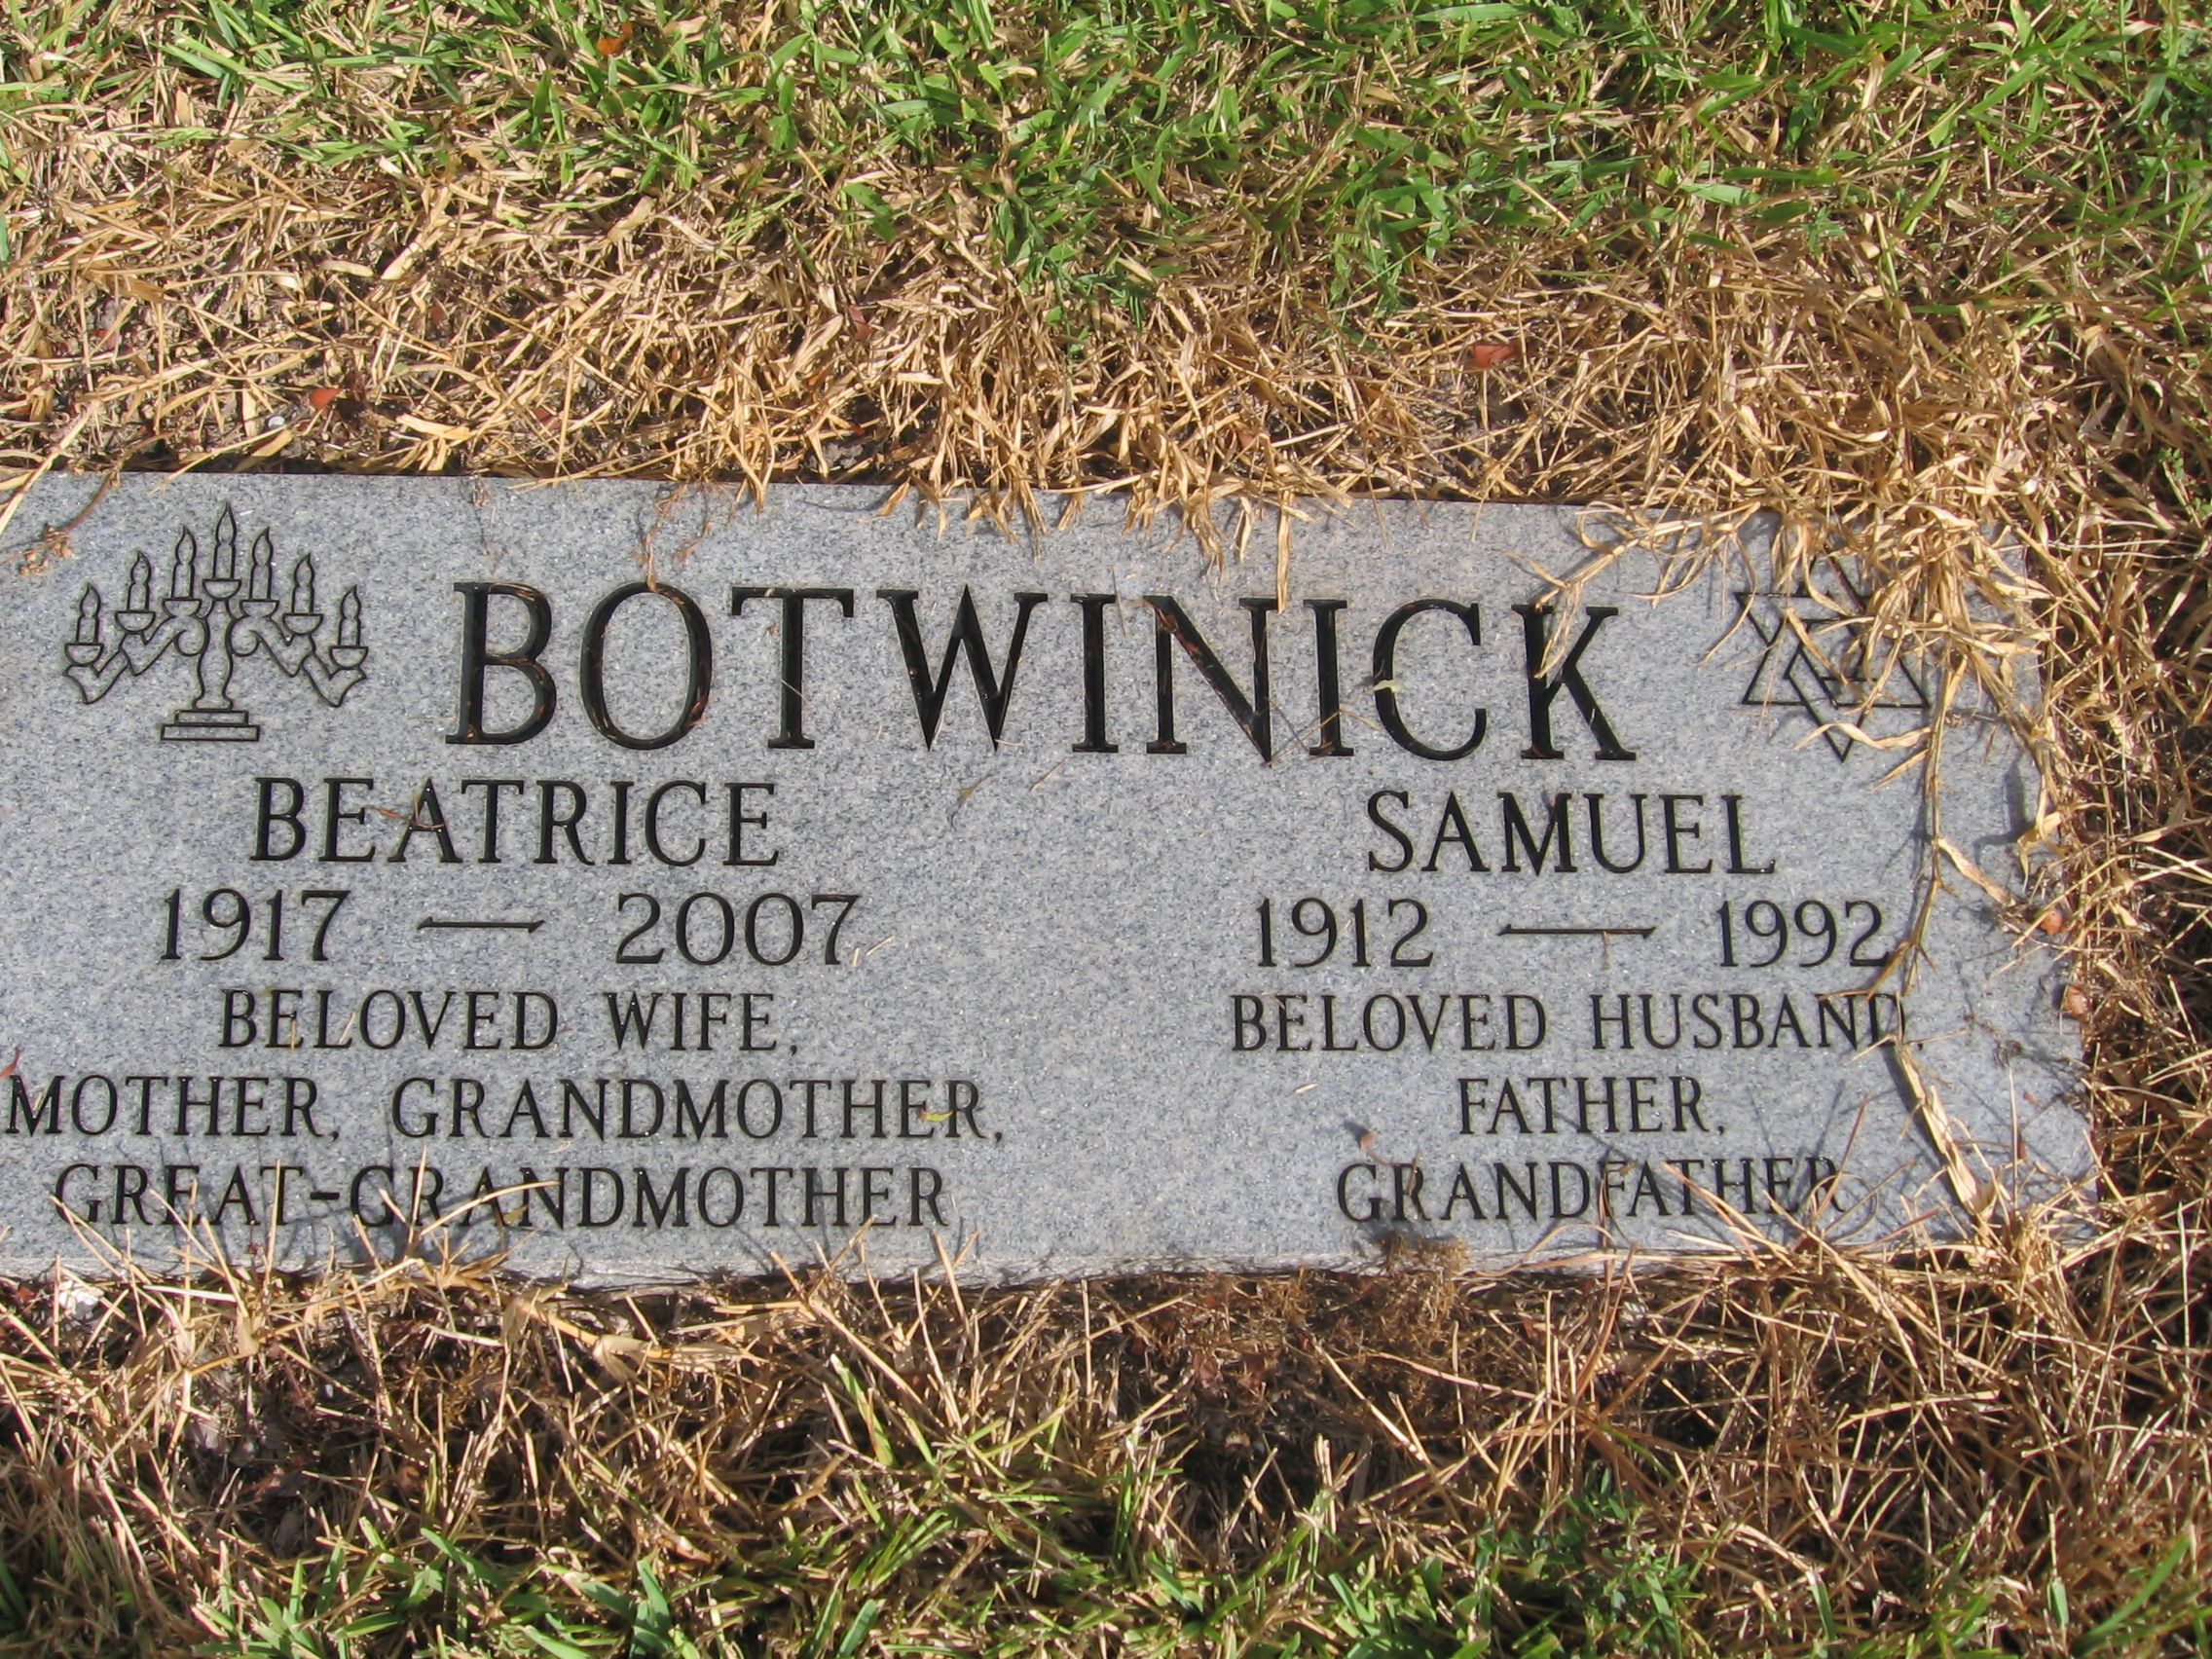 Samuel Botwinick